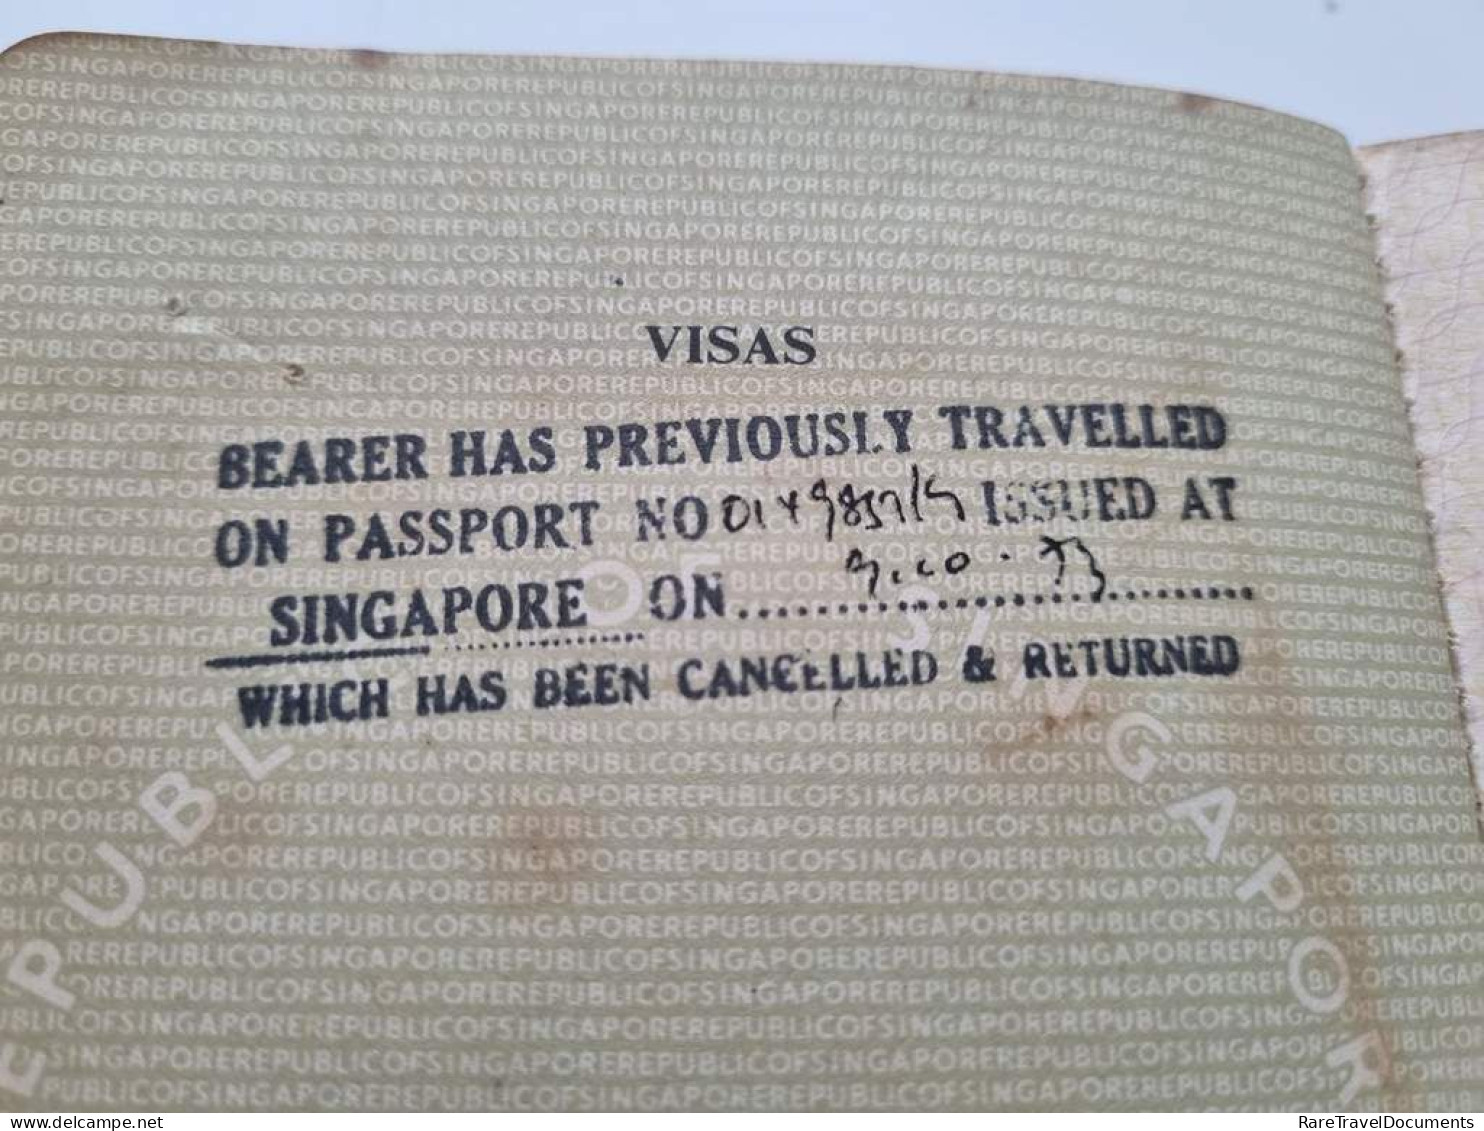 SINGAPORE Passport Passeport Reisepass of a School Principal - FREE SHIPPING!